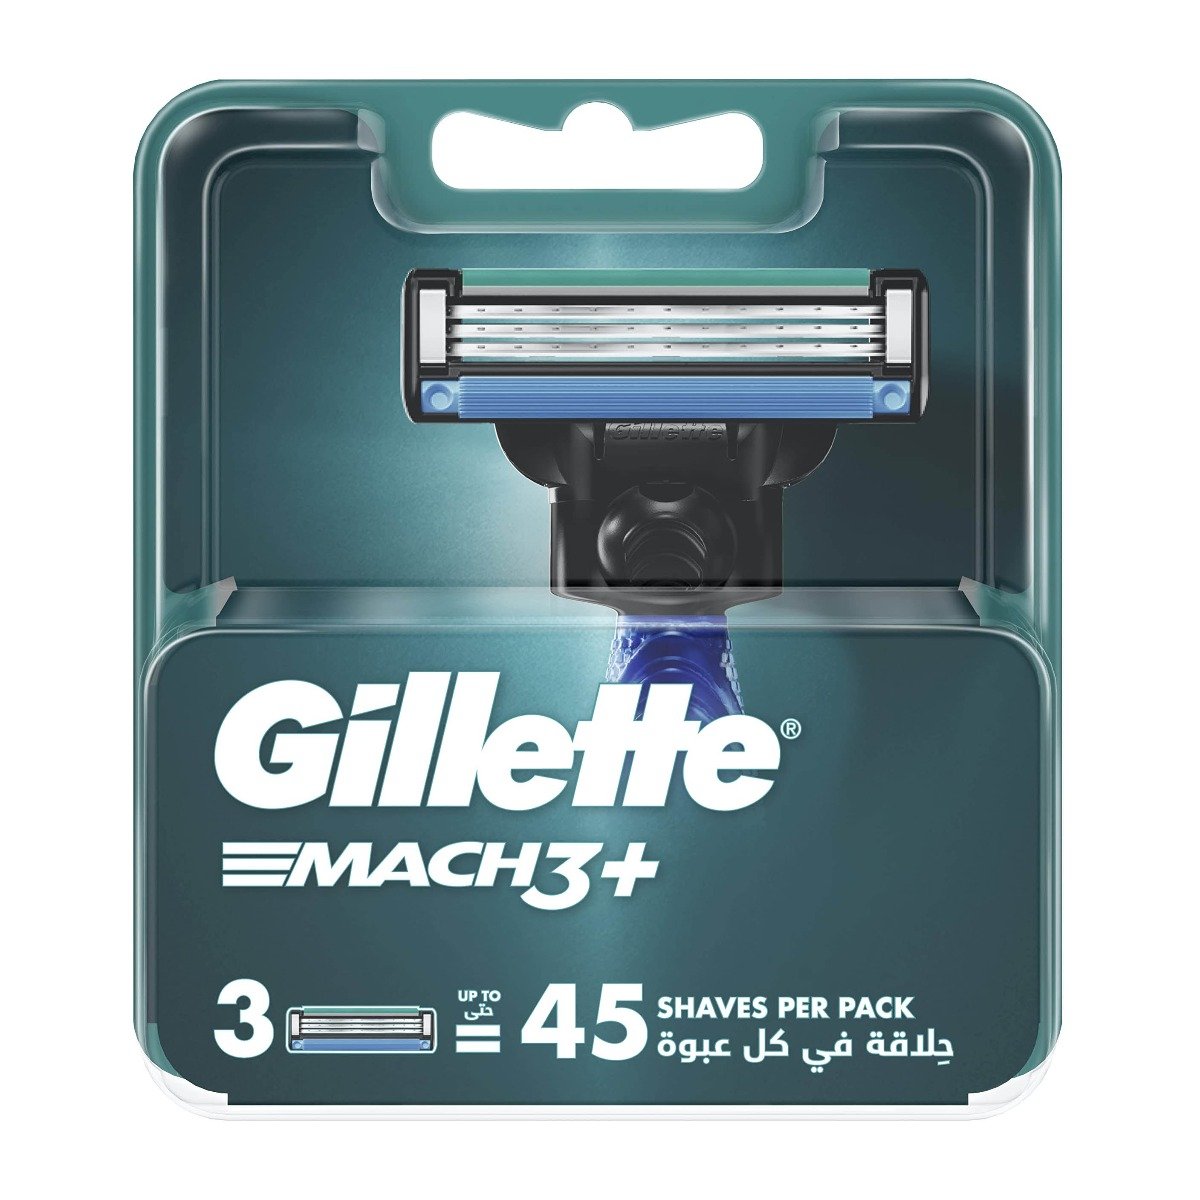 Gillette Mach 3+ - 3 Blades - Bloom Pharmacy